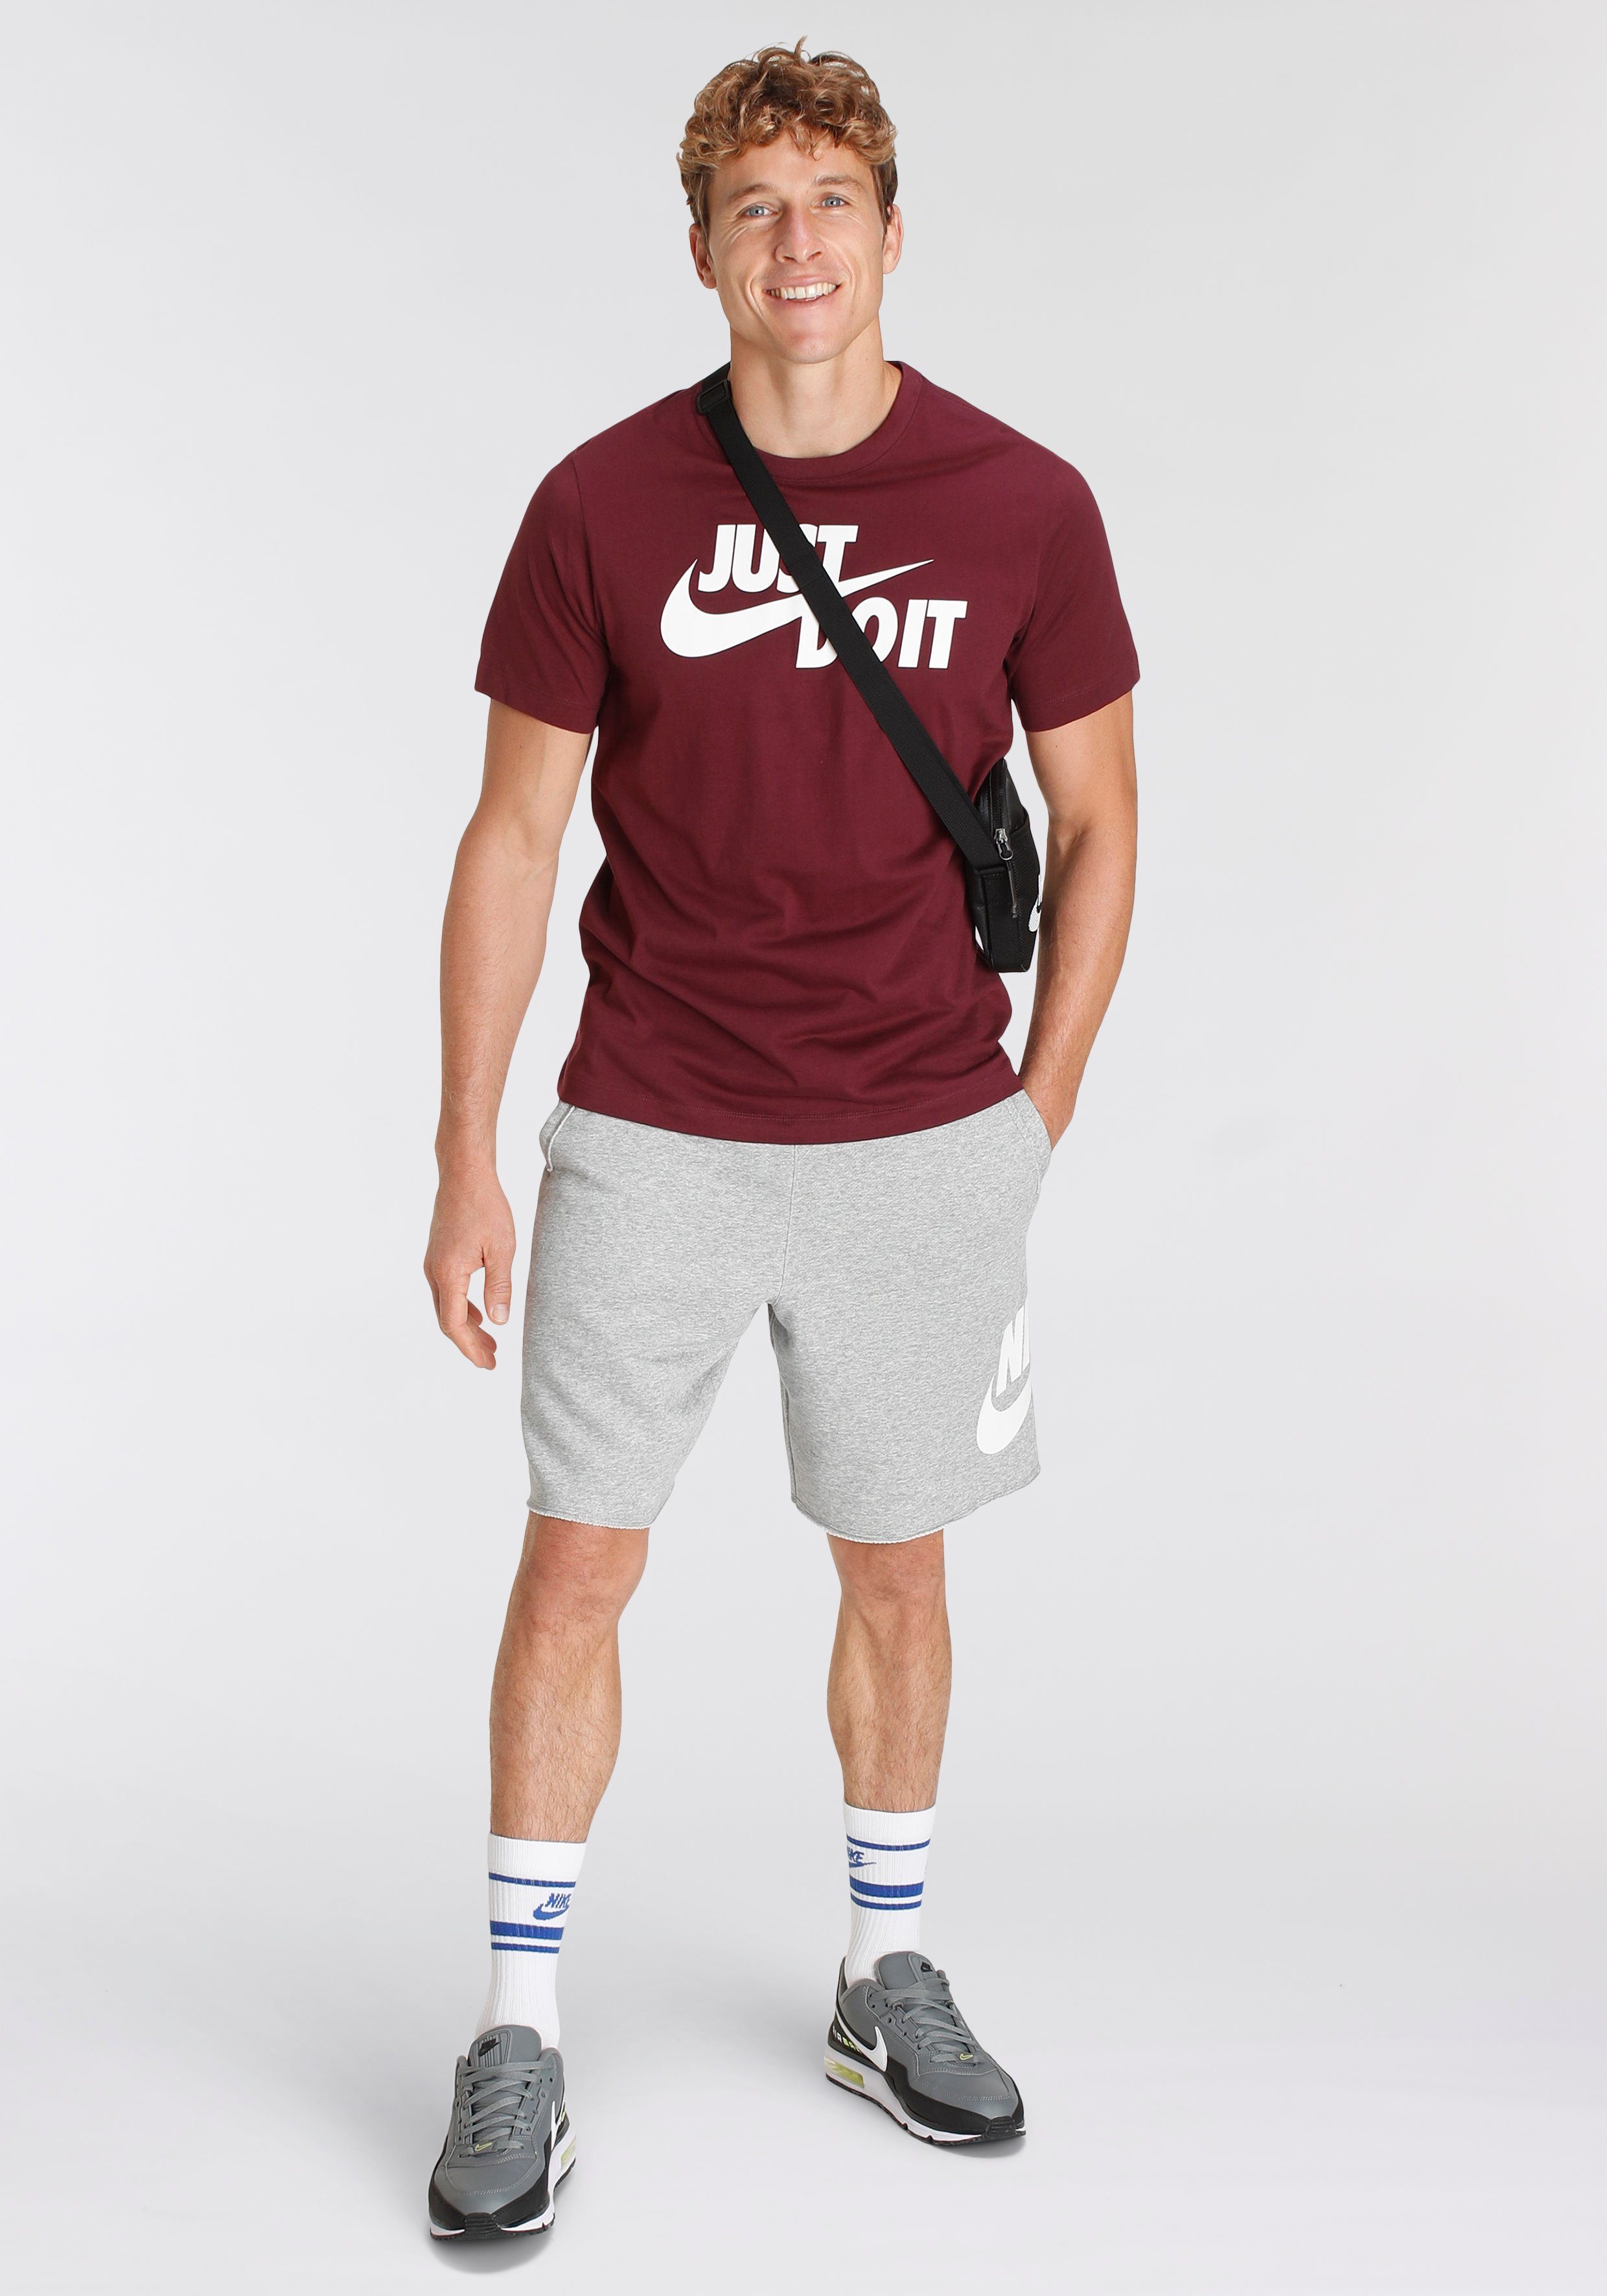 JDI NIGHT MEN'S Sportswear T-SHIRT MAROON T-Shirt Nike